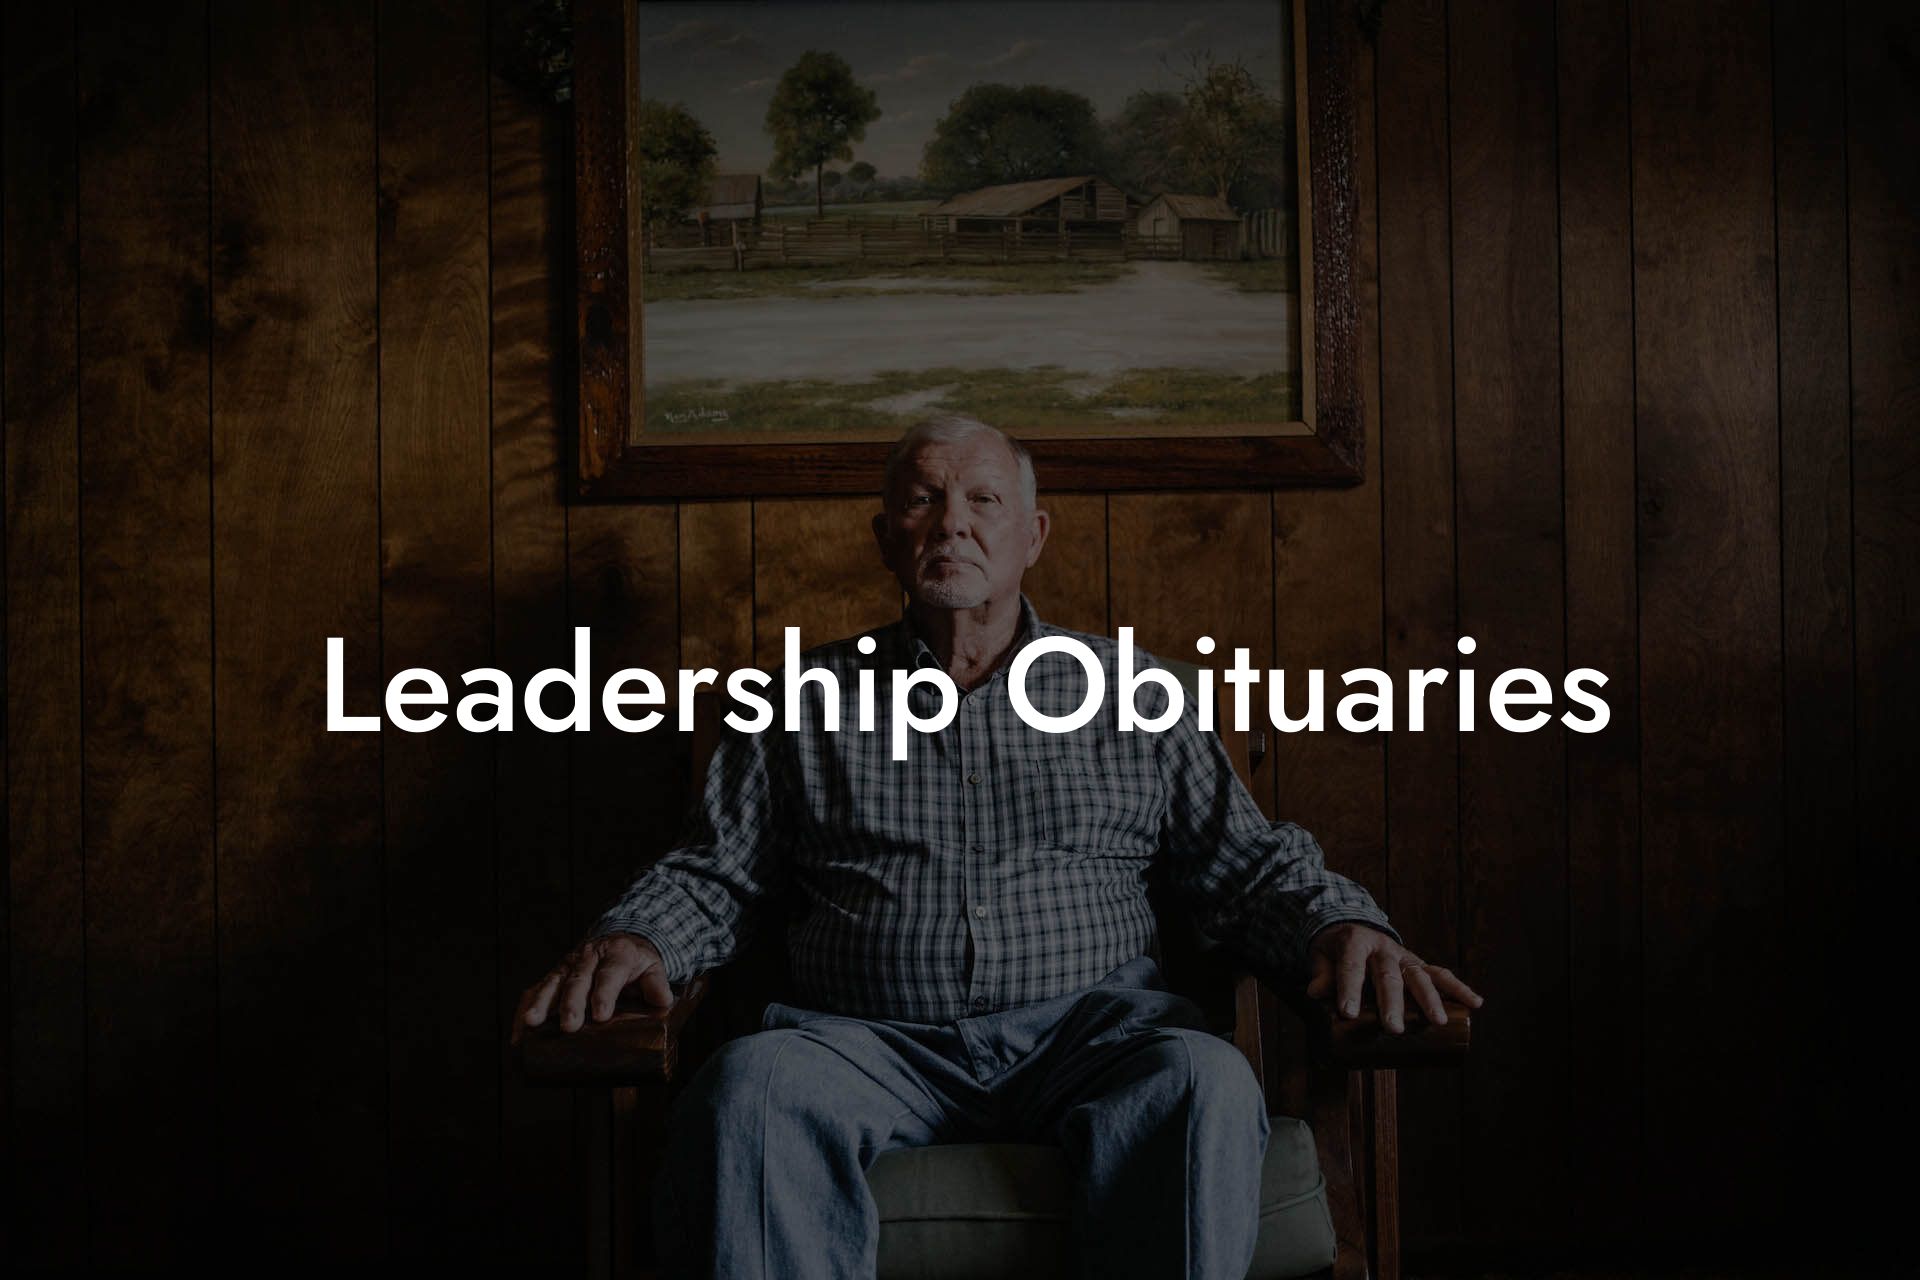 Leadership Obituaries